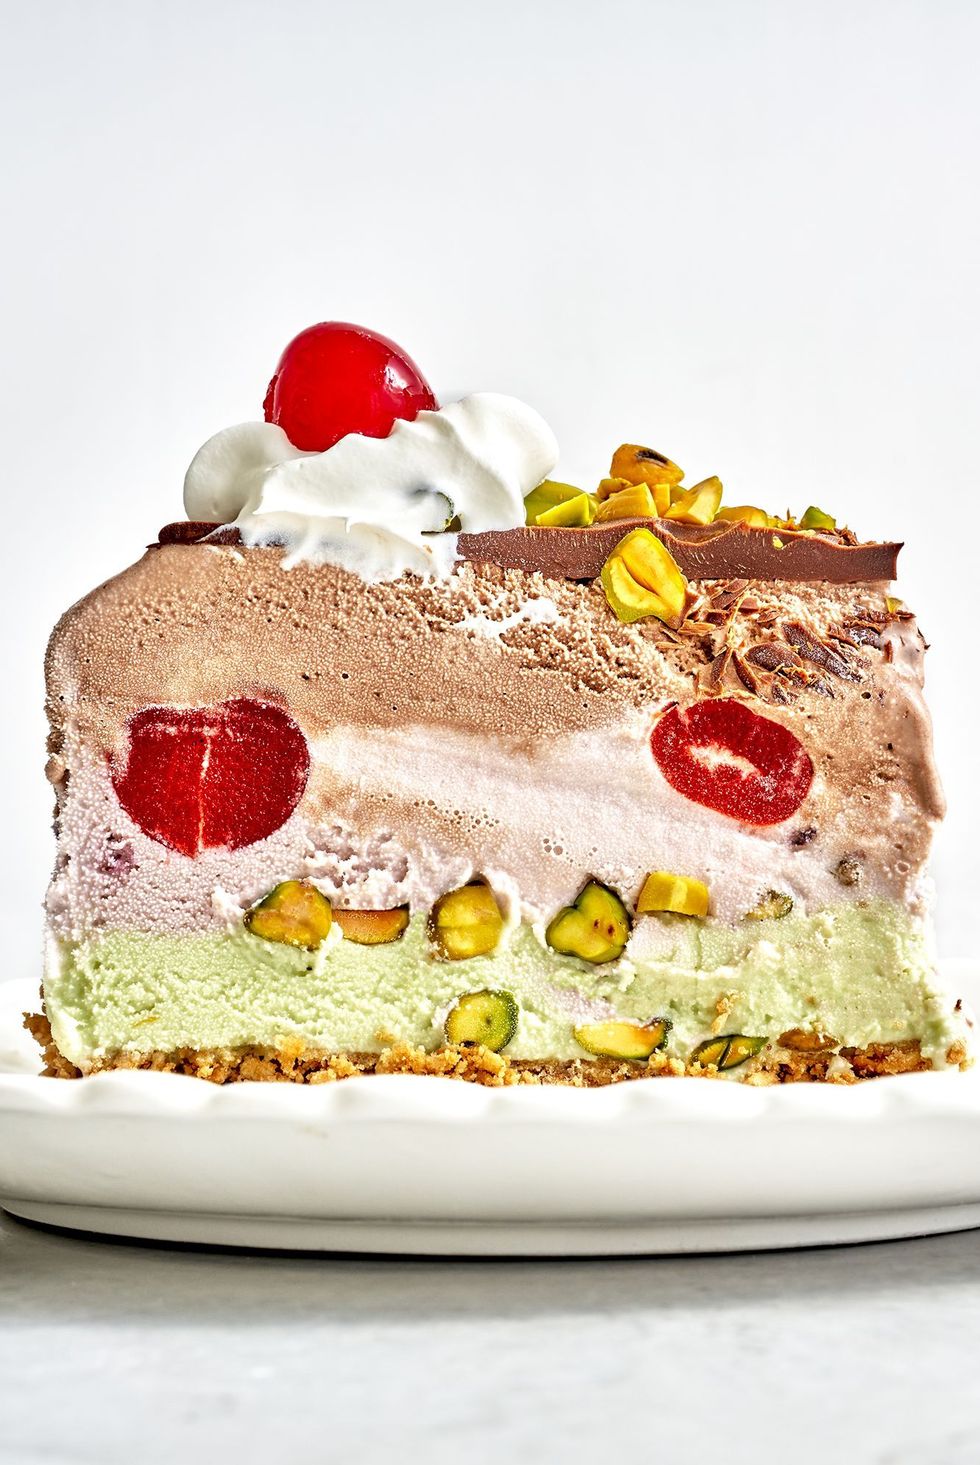 21 Easy Ice Cream Cake Recipes - How To Make Ice Cream Cake